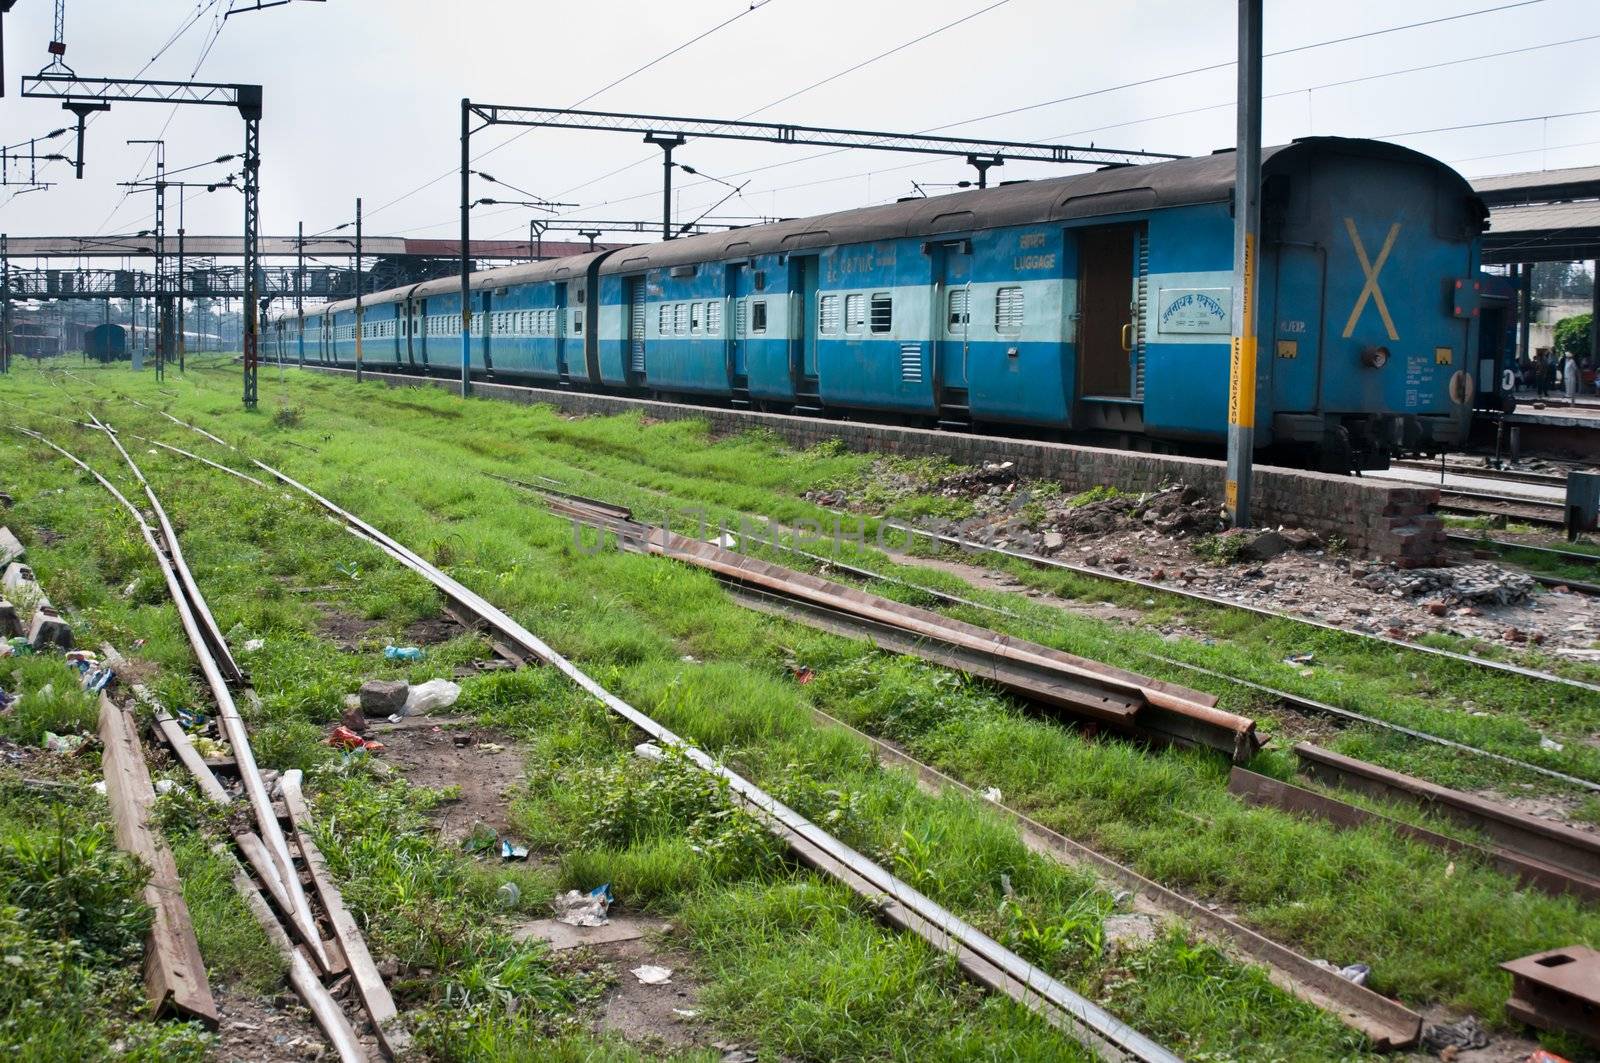 Train of the Indian railway on a station by iryna_rasko